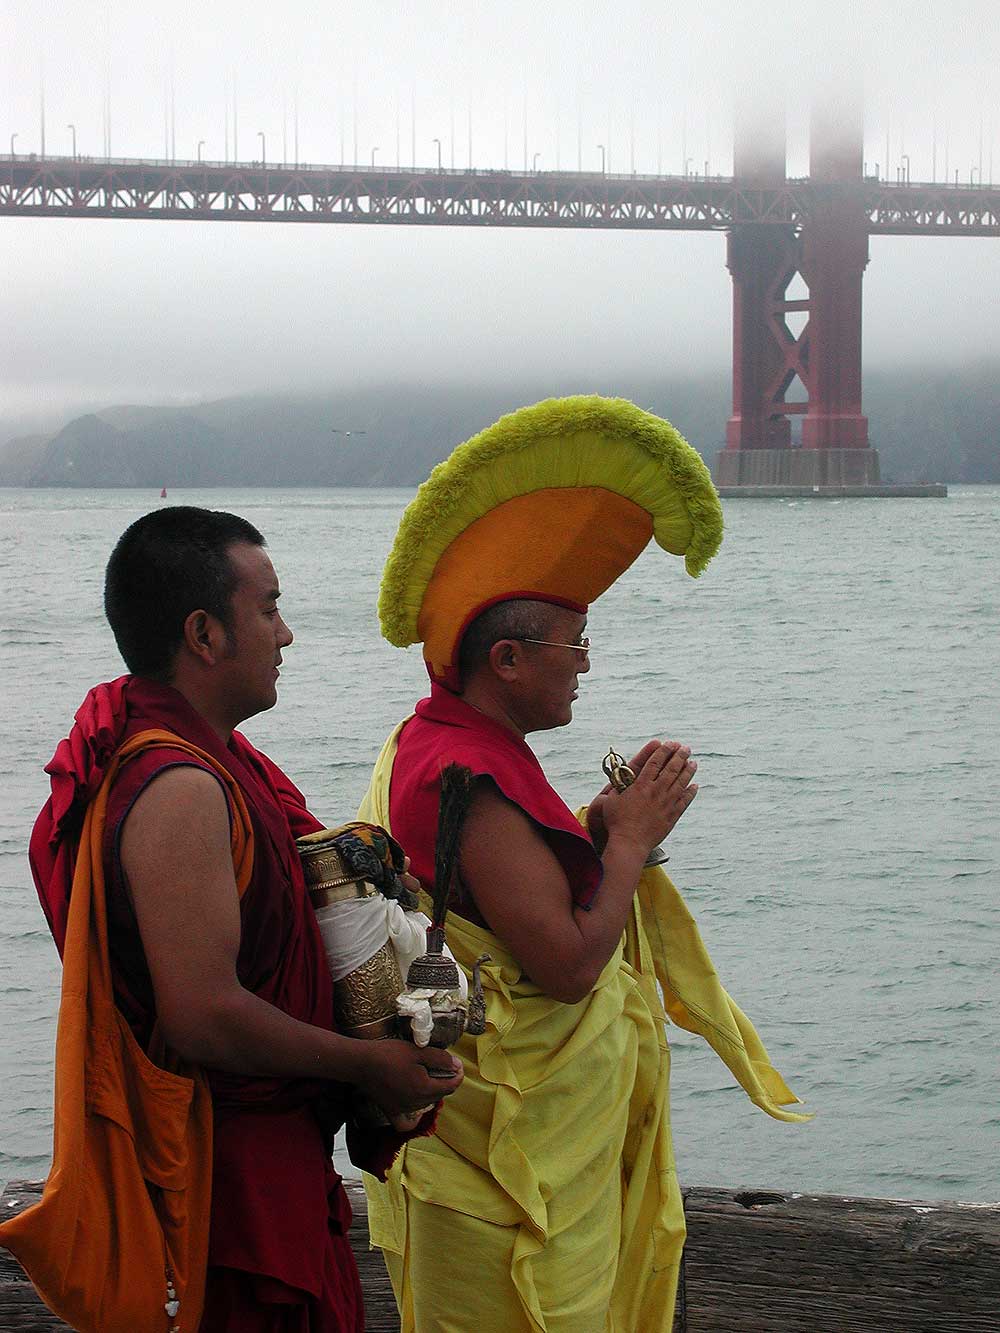 Buddhist monks perform a ritual at the Golden Gate Bridge